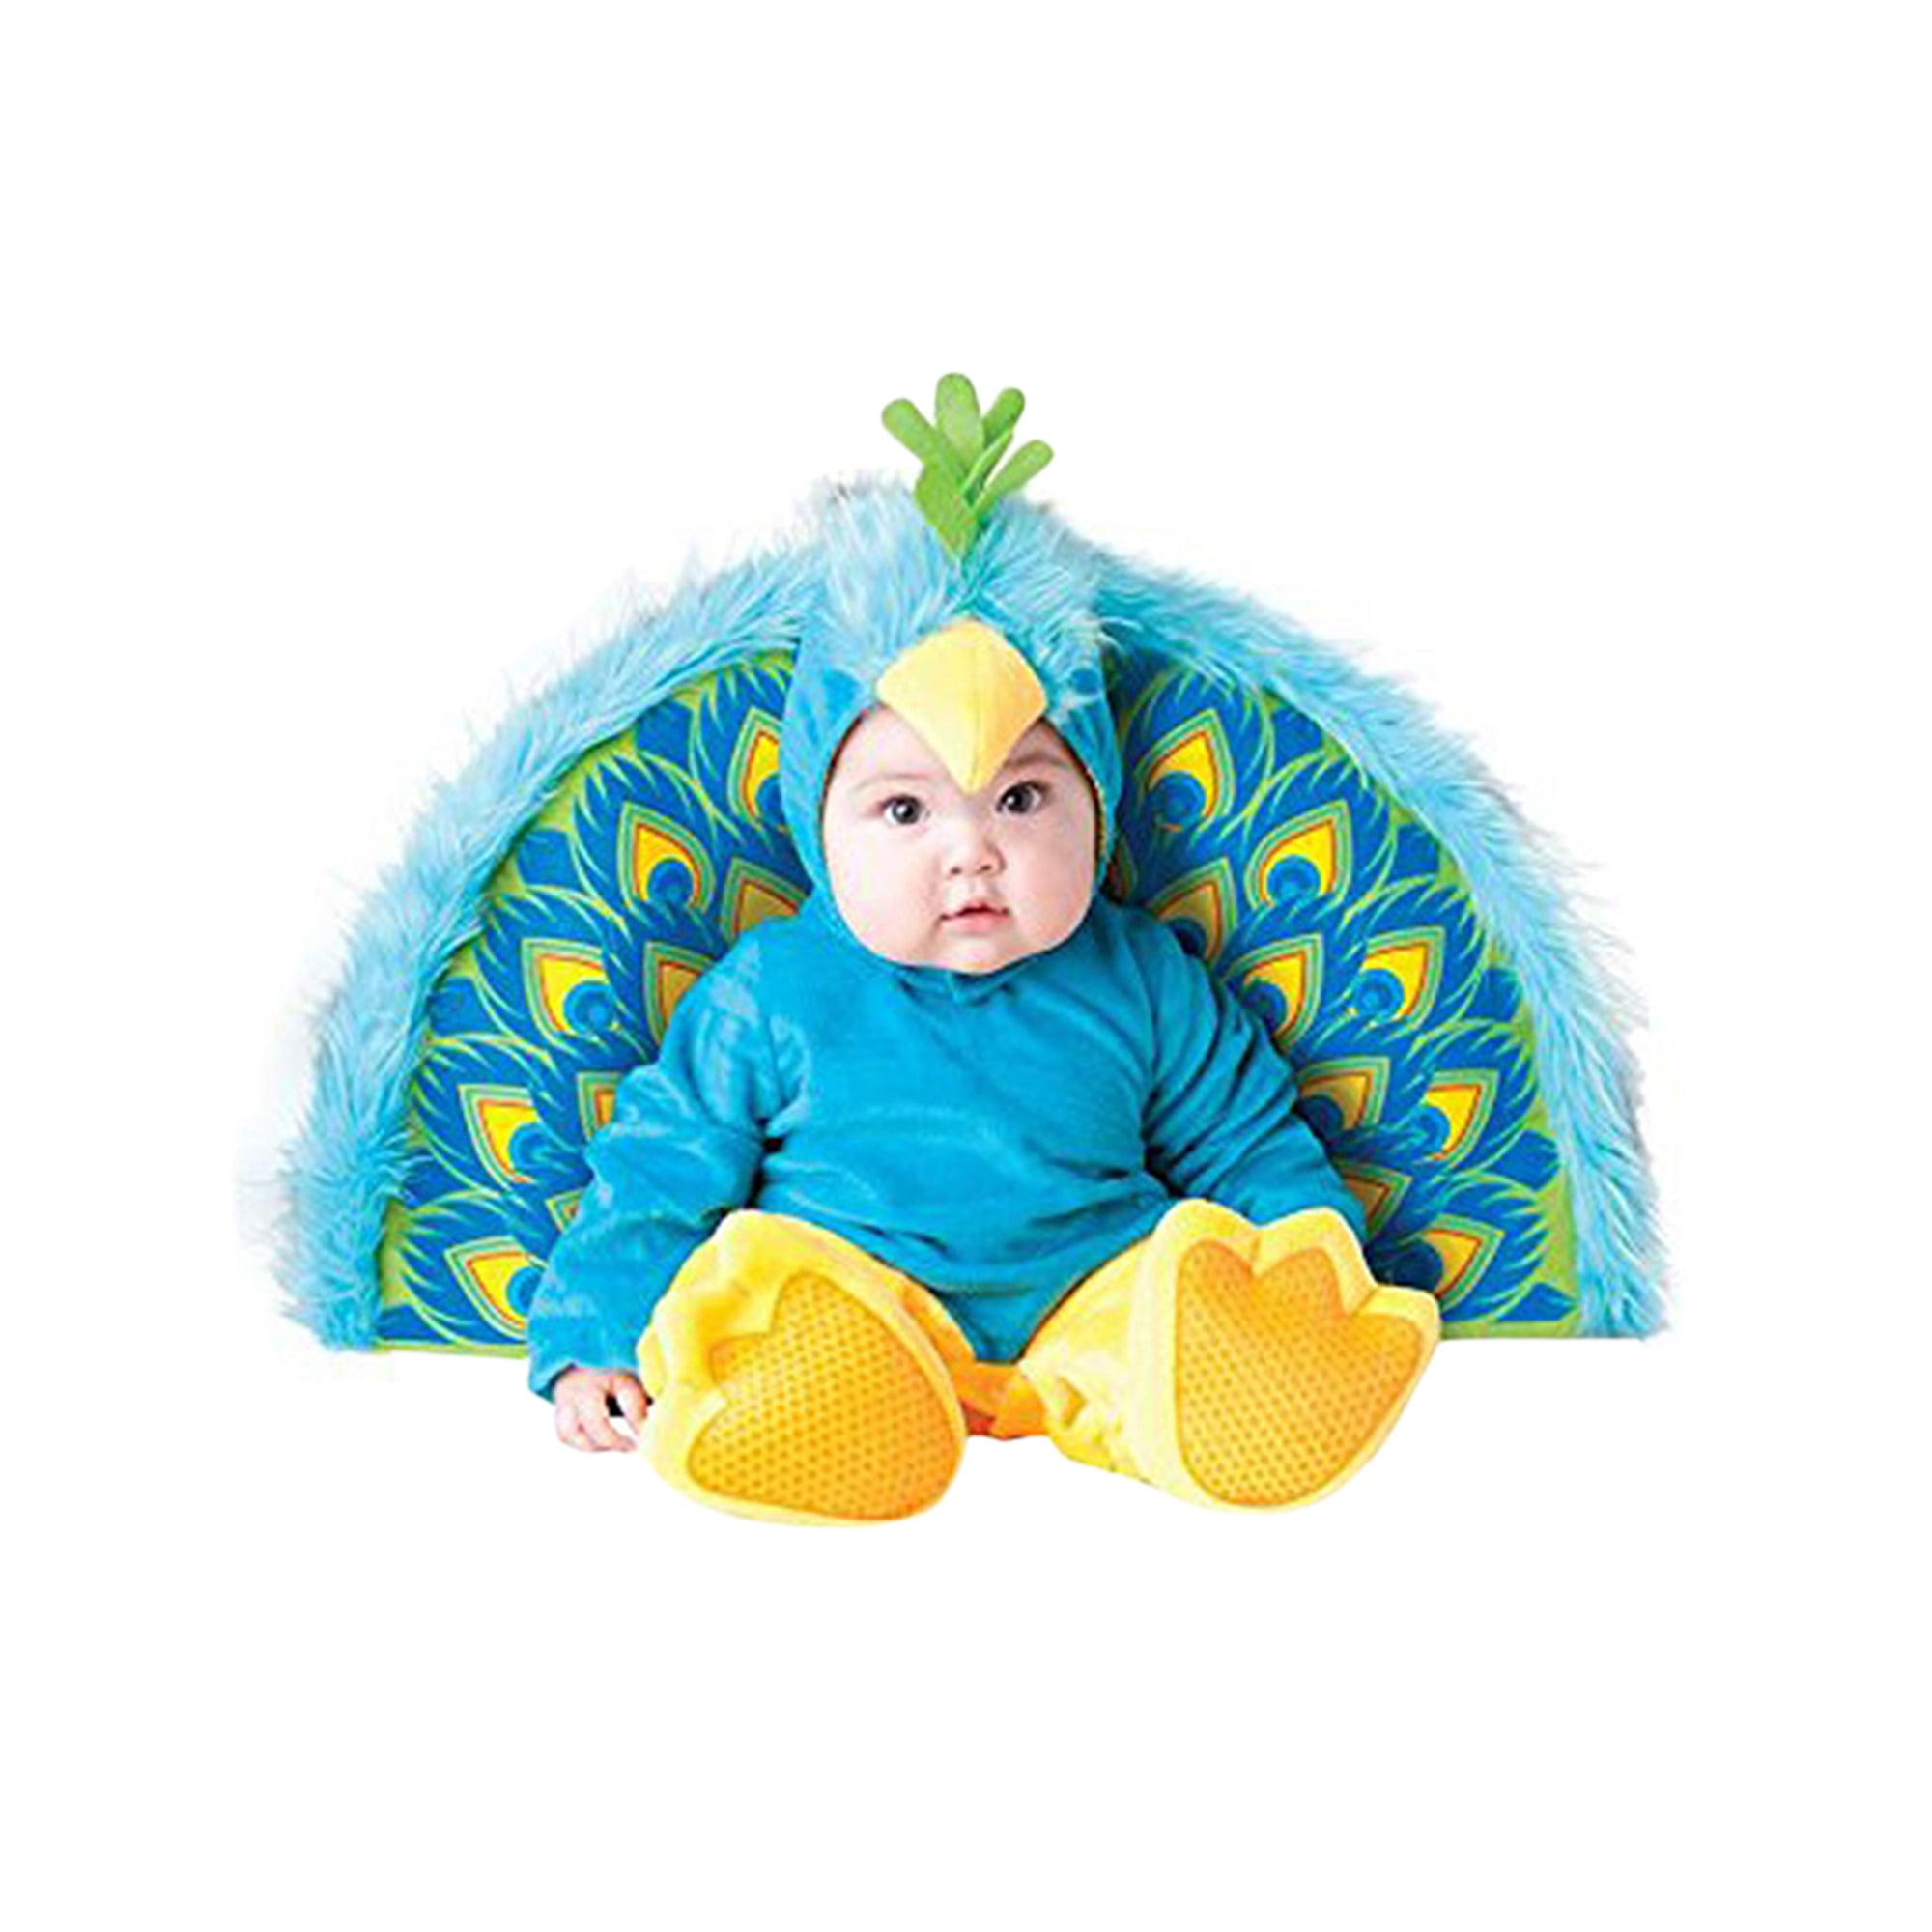 Kleding Unisex kinderkleding pakken Baby Owl Costume Halloween Costume for Kids Sizes Baby to Toddler Super Cute Animal Baby Bird FREE SHIPPING 